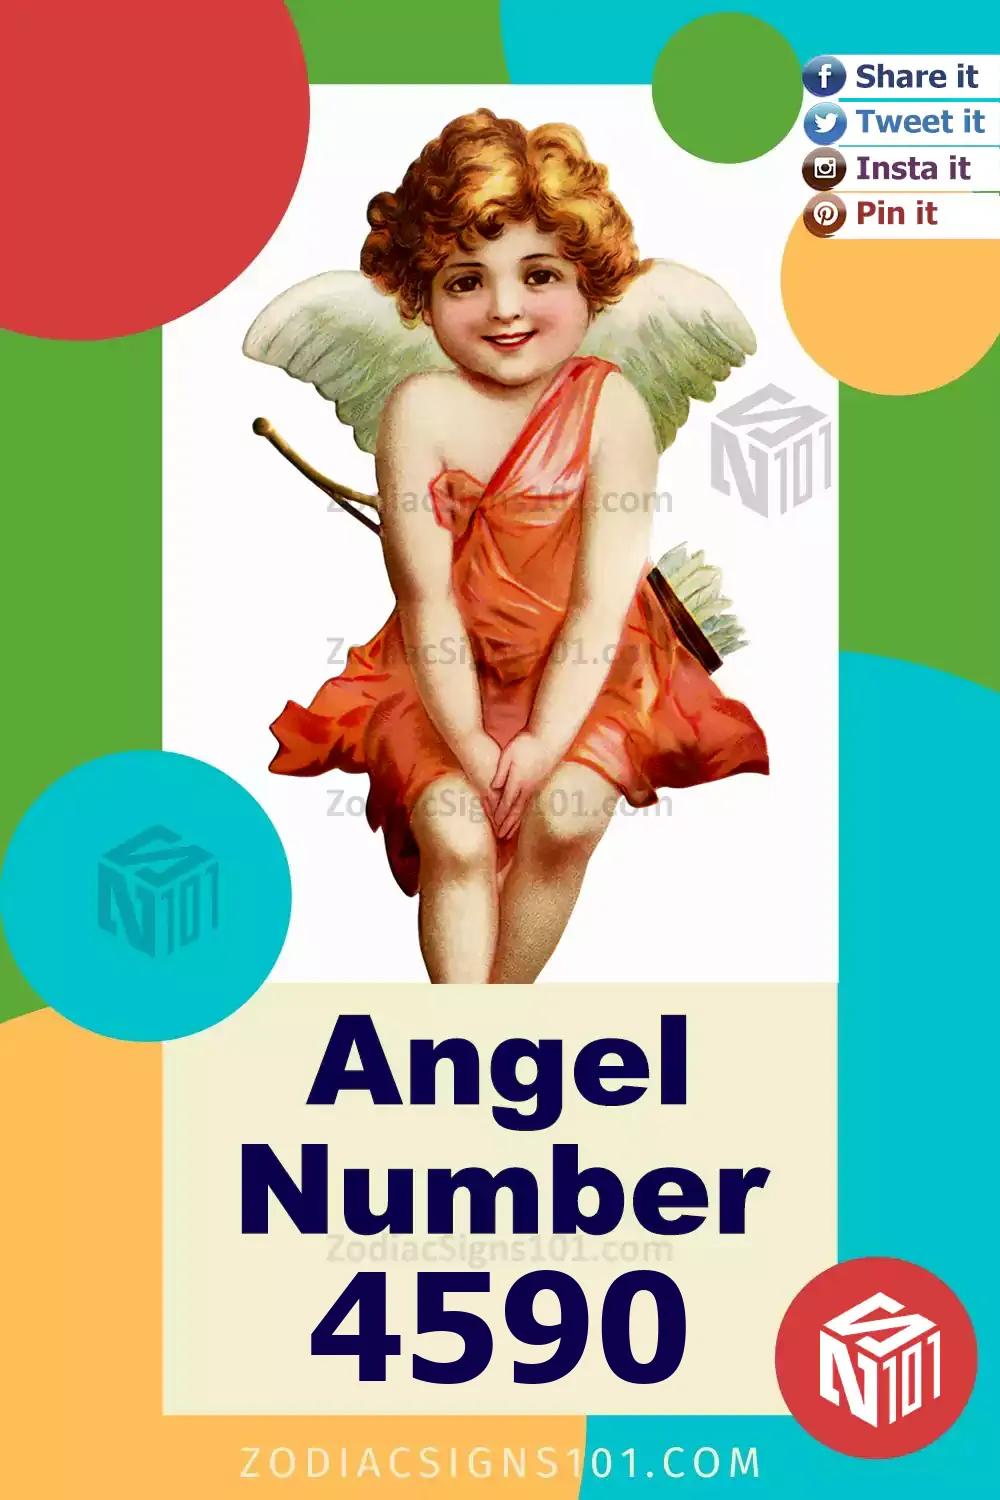 4590-Angel-Number-Meaning.jpg